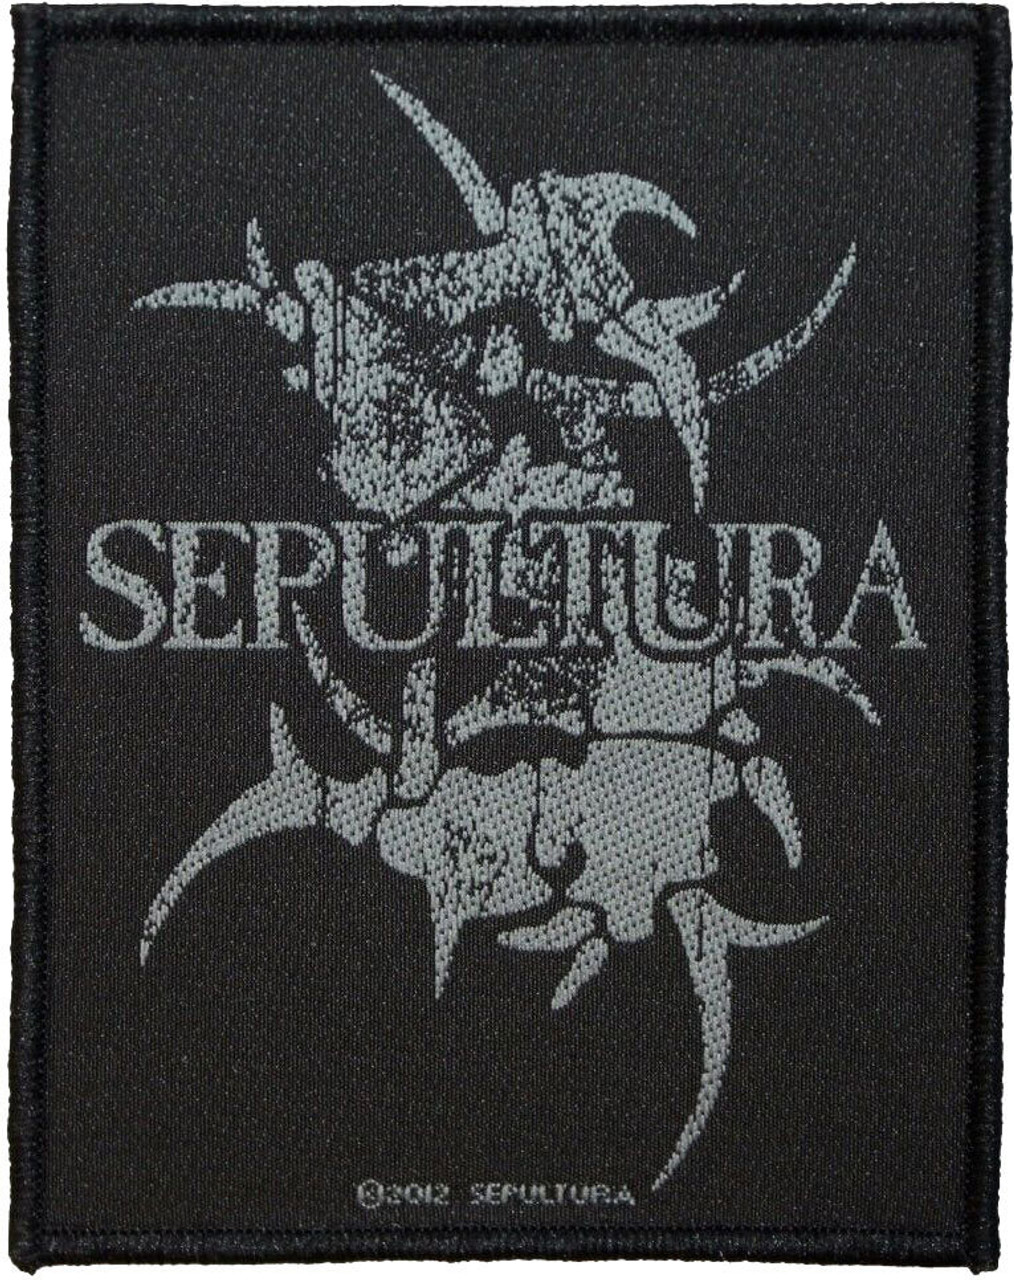 Sepultura - Quadra – Pull The Plug Patches